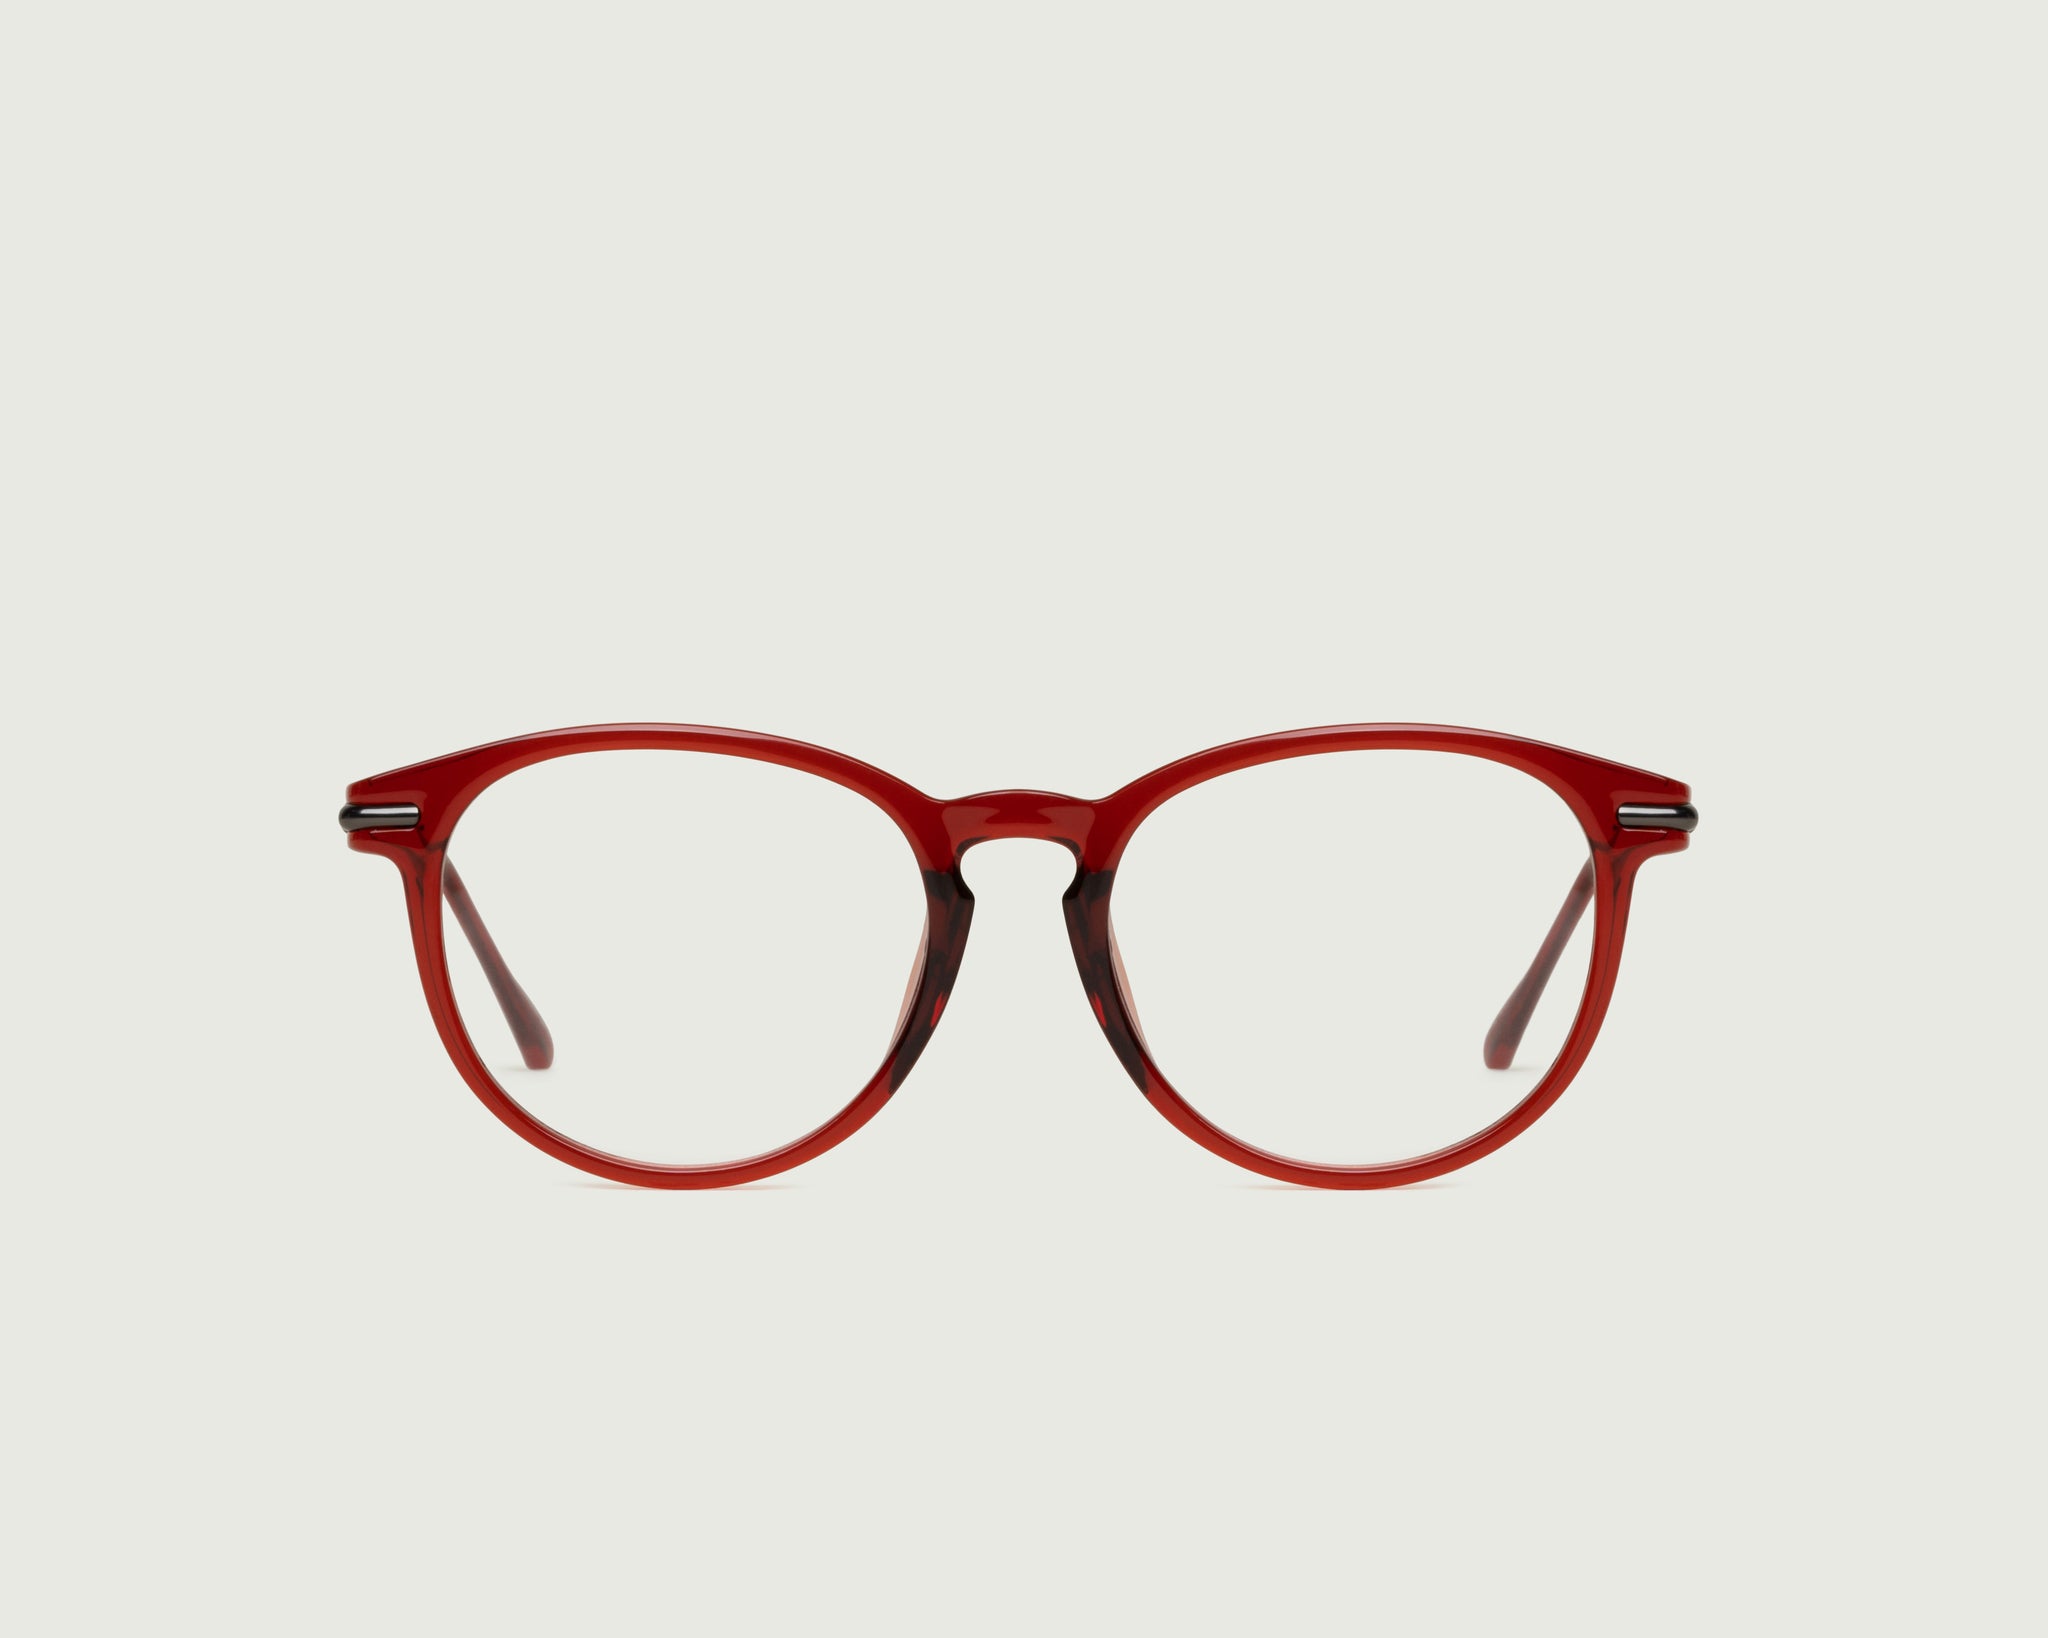 Maraschino::Morgan Eyeglasses round red plastic front